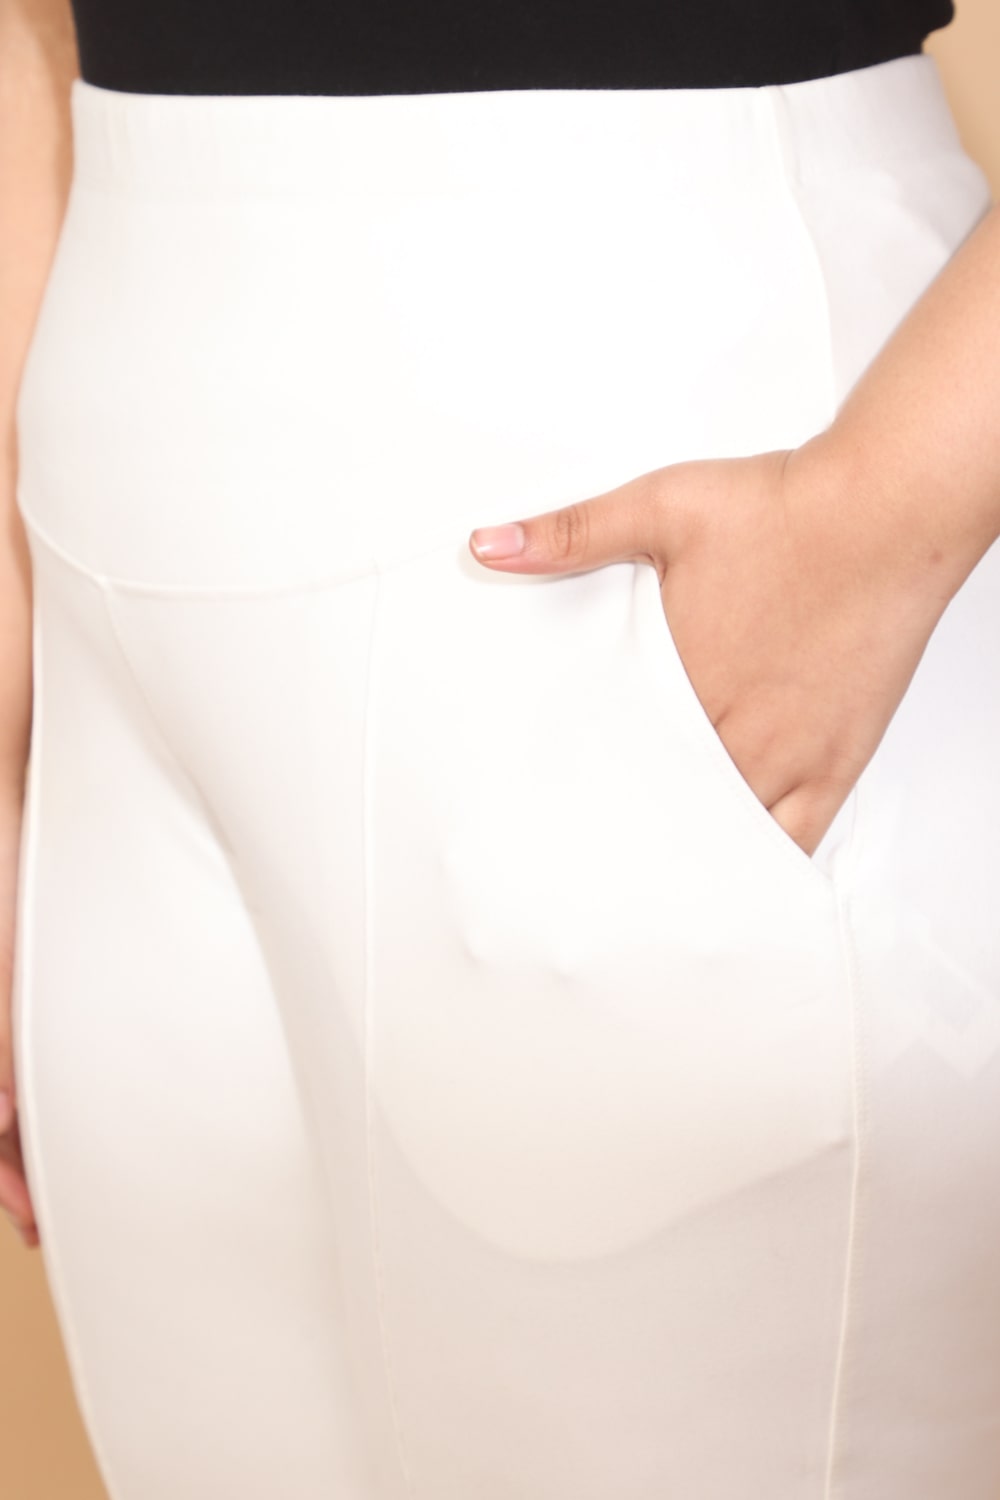 15 Best Tummy Control Underwear You Didnt Know You Needed  PINKVILLA